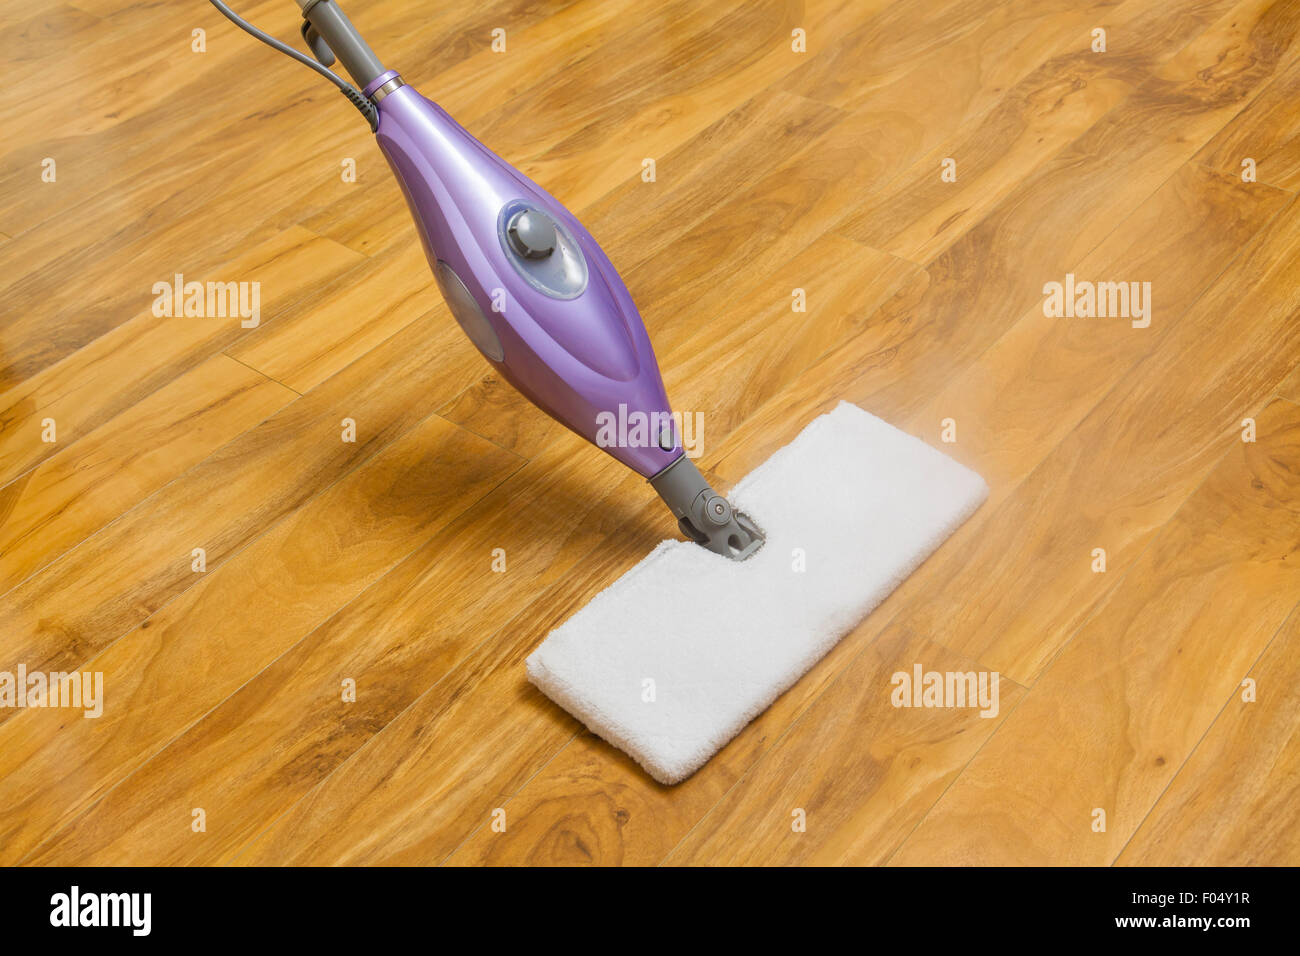 Using a steam mop Stock Photo